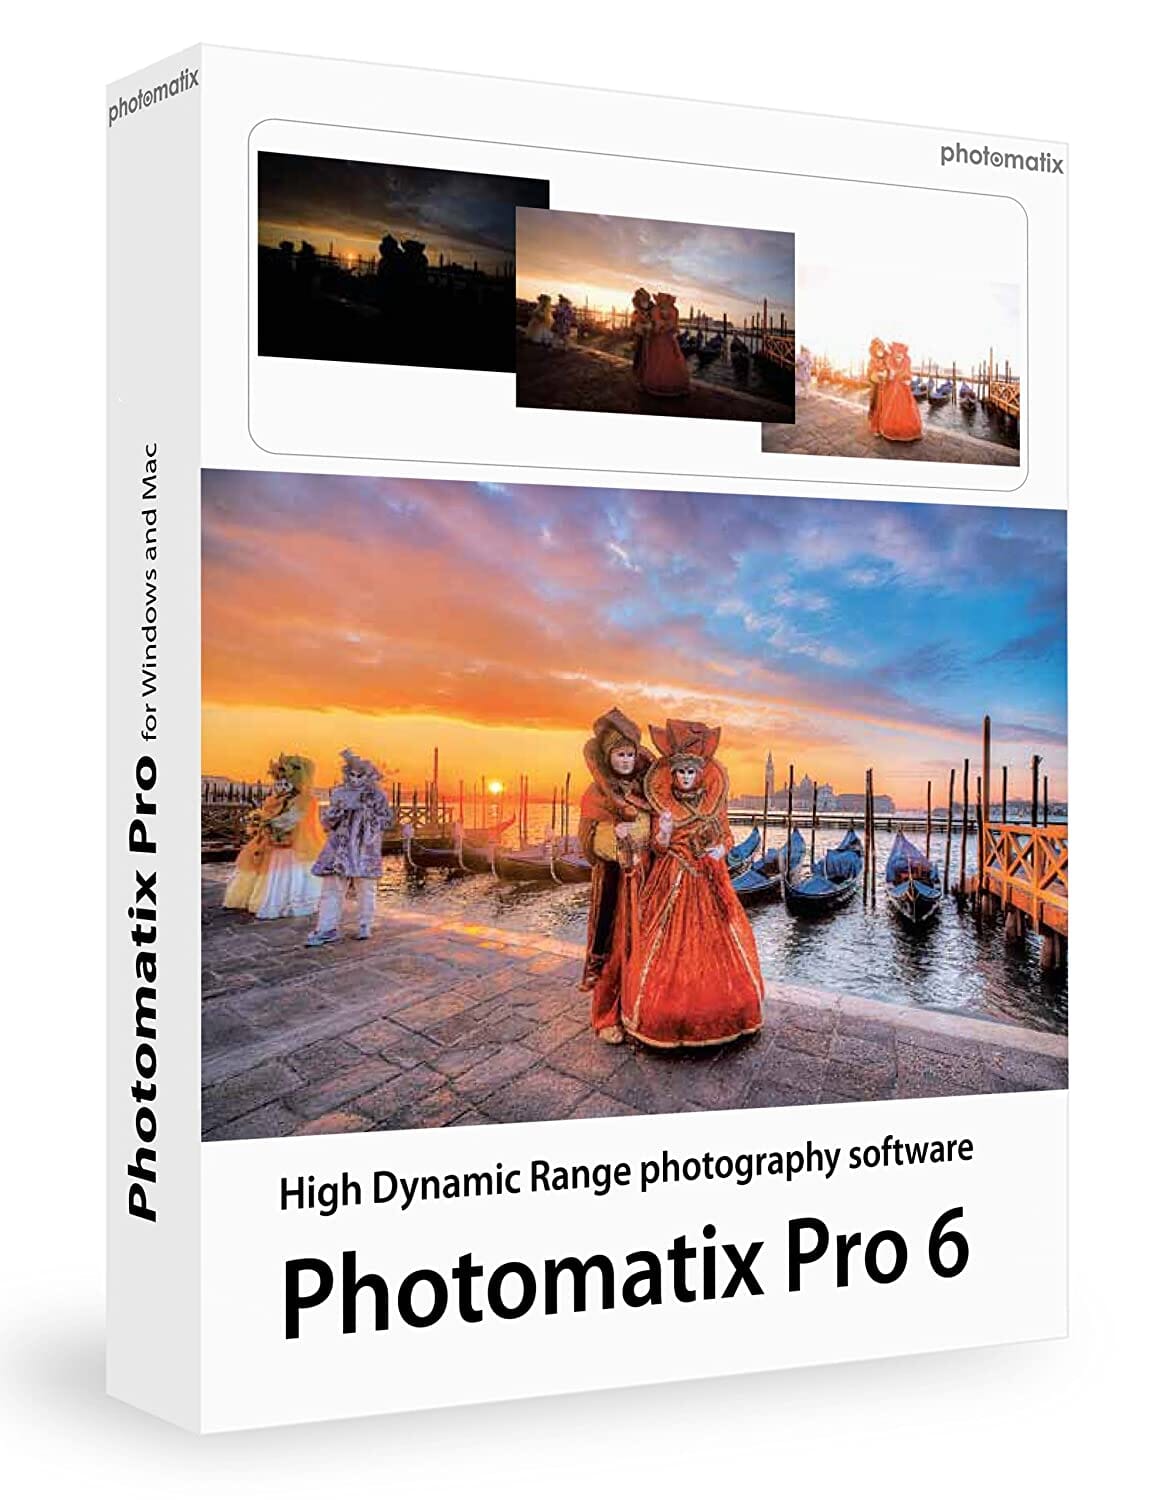 photomatix software